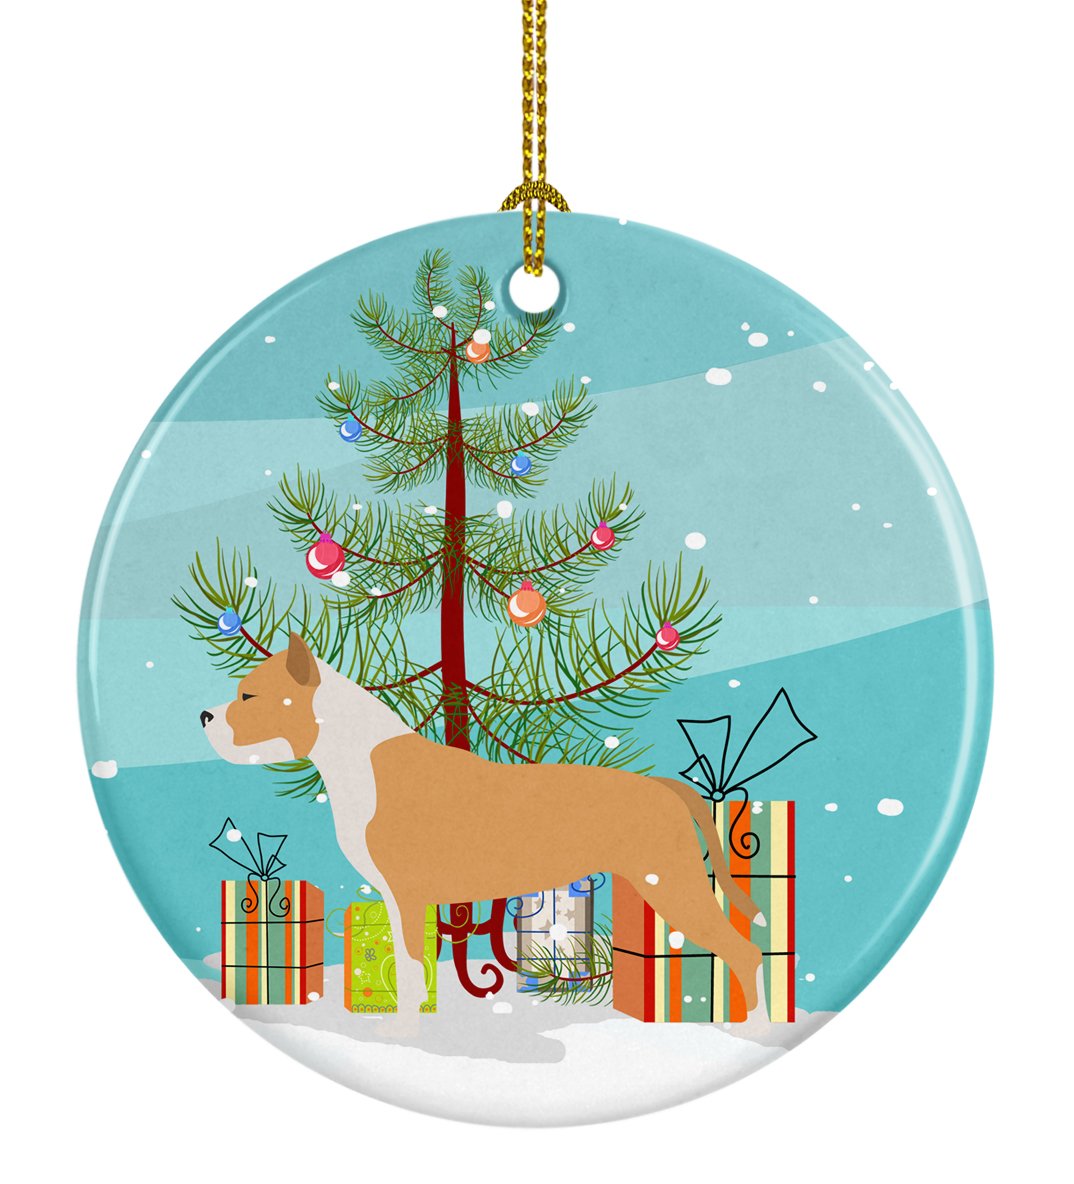 Staffordshire Bull Terrier Merry Christmas Tree Ceramic Ornament BB2972CO1 by Caroline's Treasures